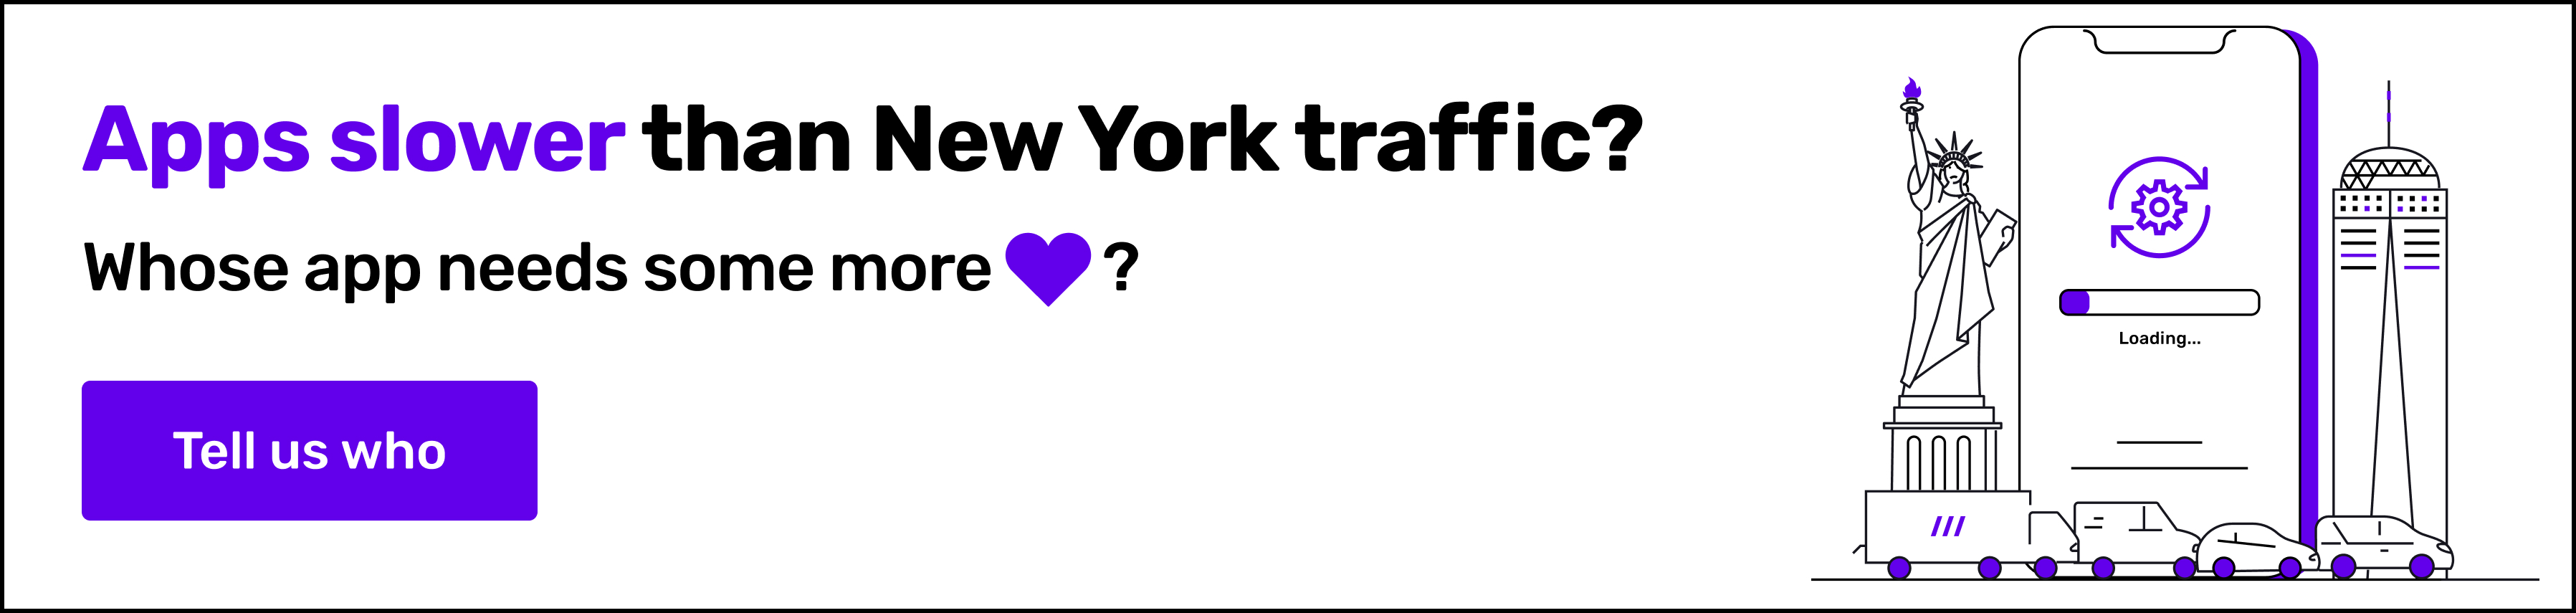 Apps slower than New York traffic?